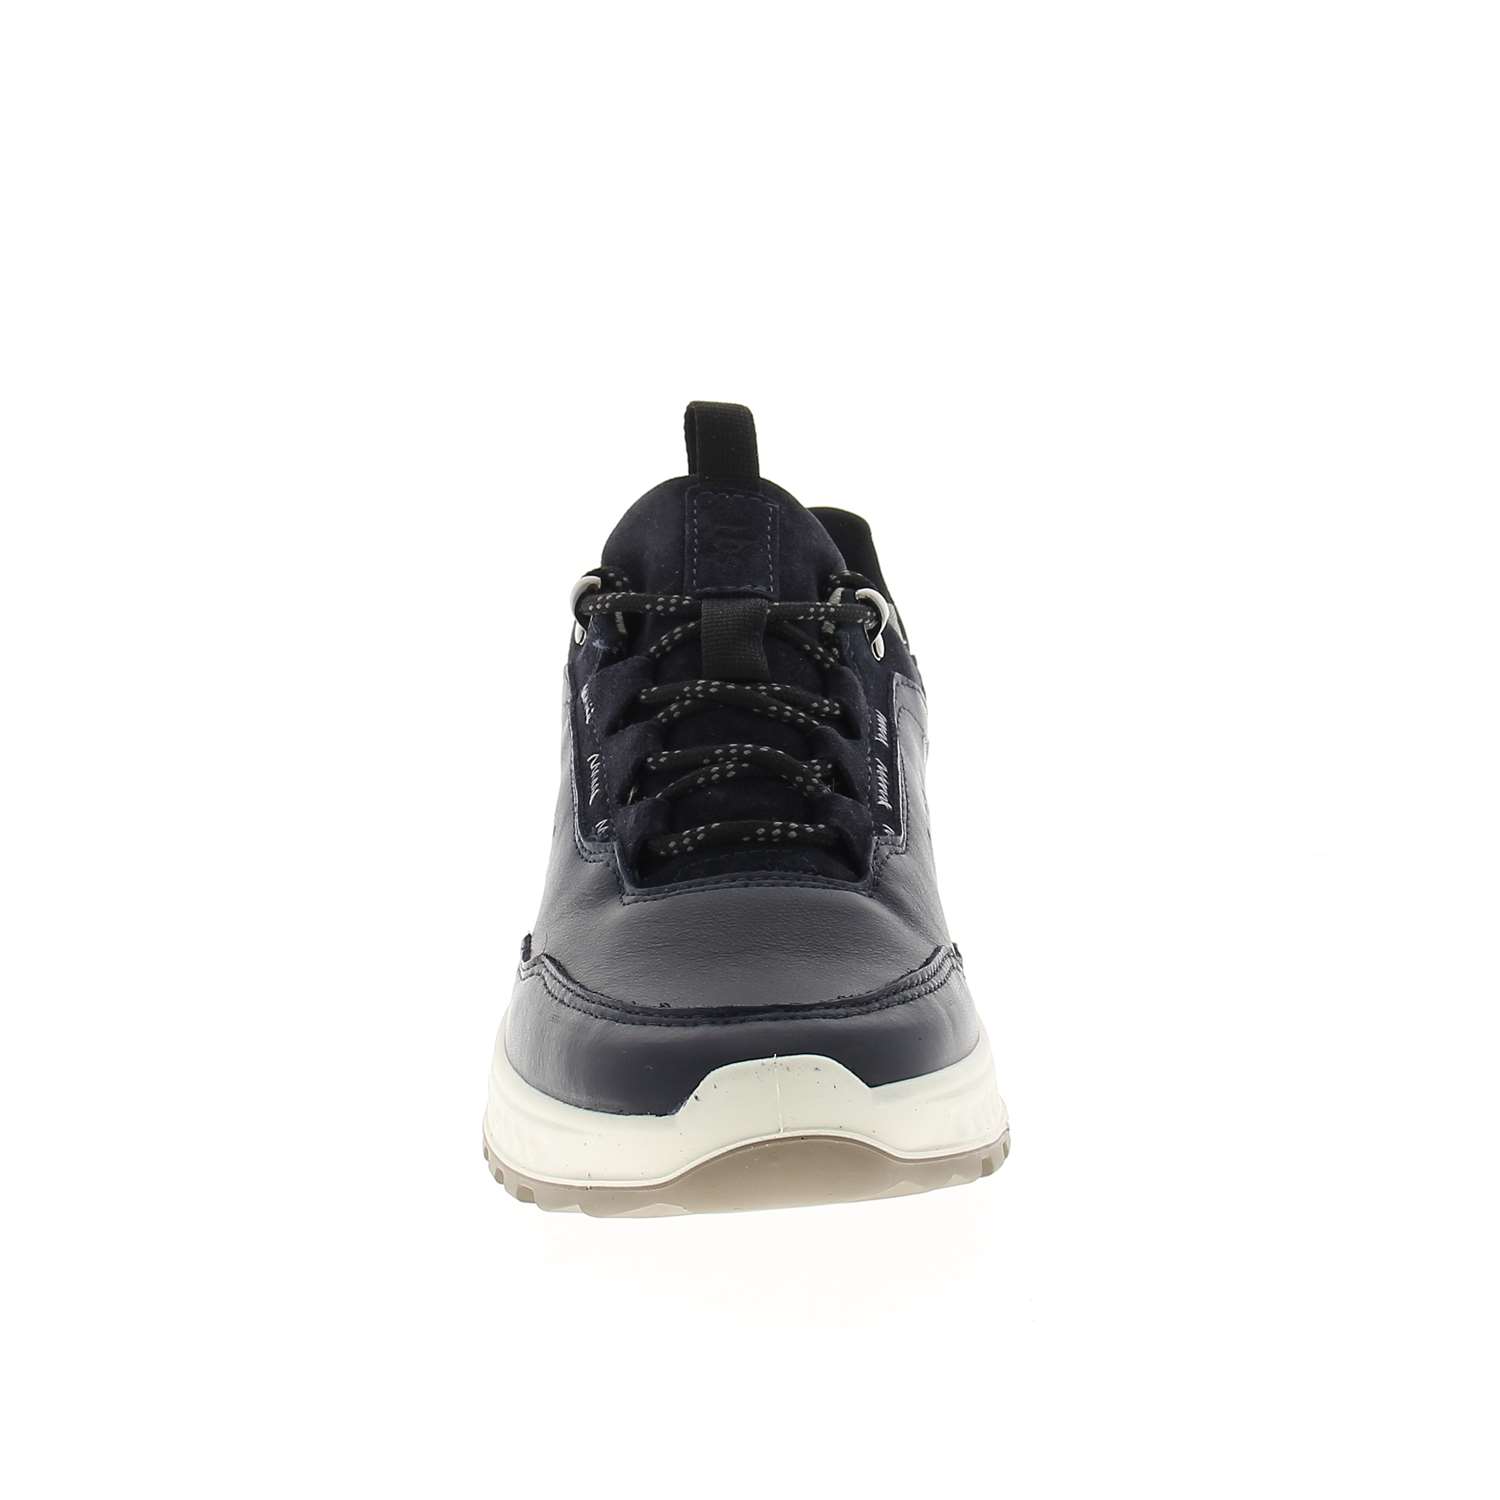 03 - LINDOLE - TBS - Chaussures à lacets - Cuir